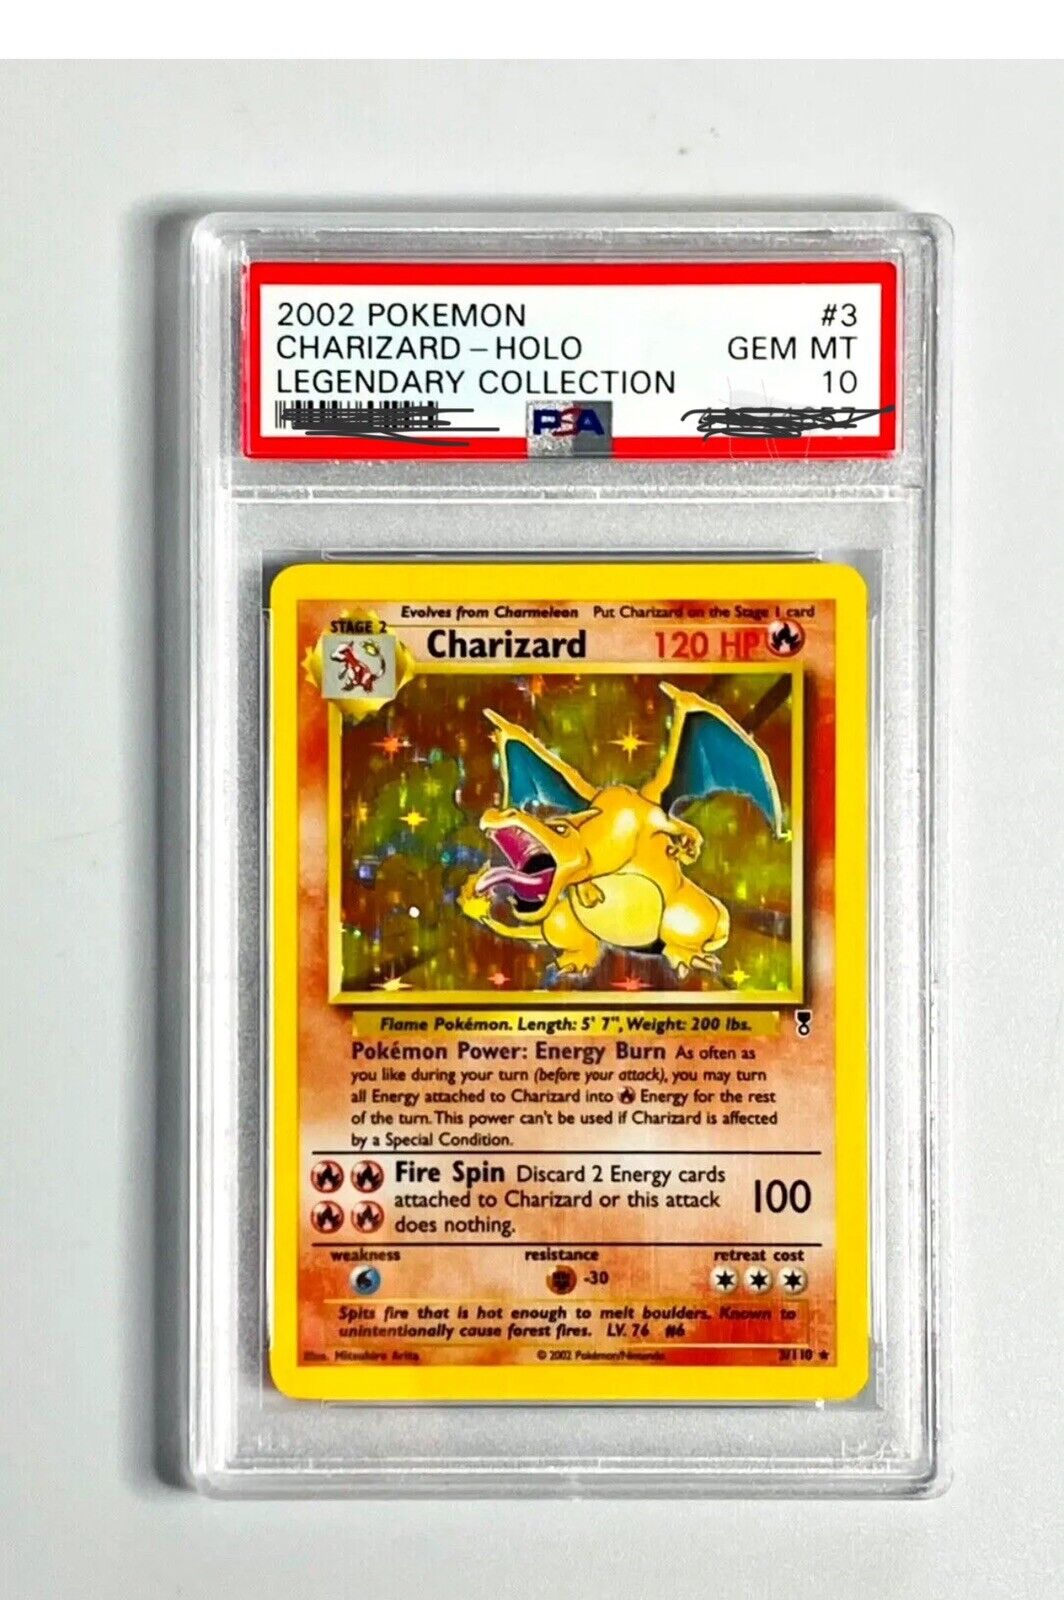 2002 Pokemon PSA 10 GEM MINT Charizard holo Legendary Collection - Pop 14 - (T)